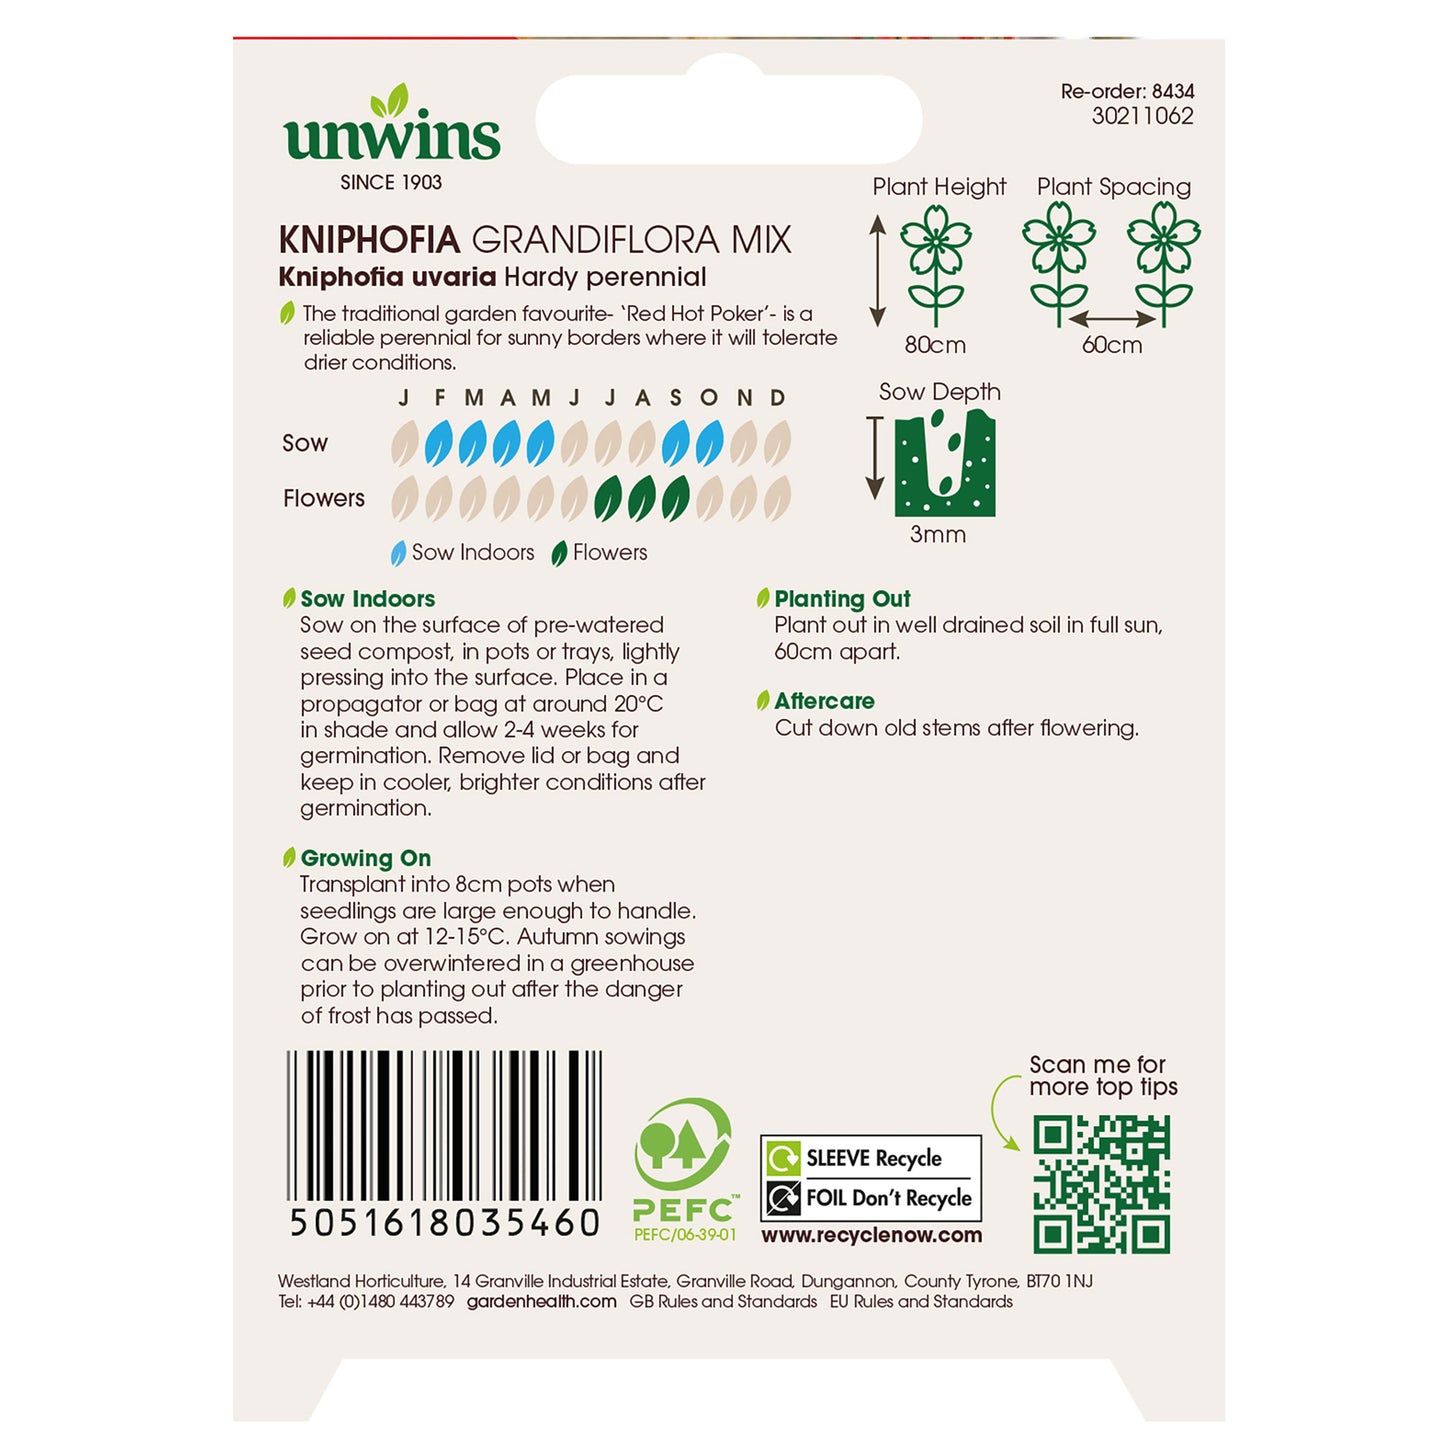 Unwins Kniphofia Grandiflora Mix Seeds back of pack